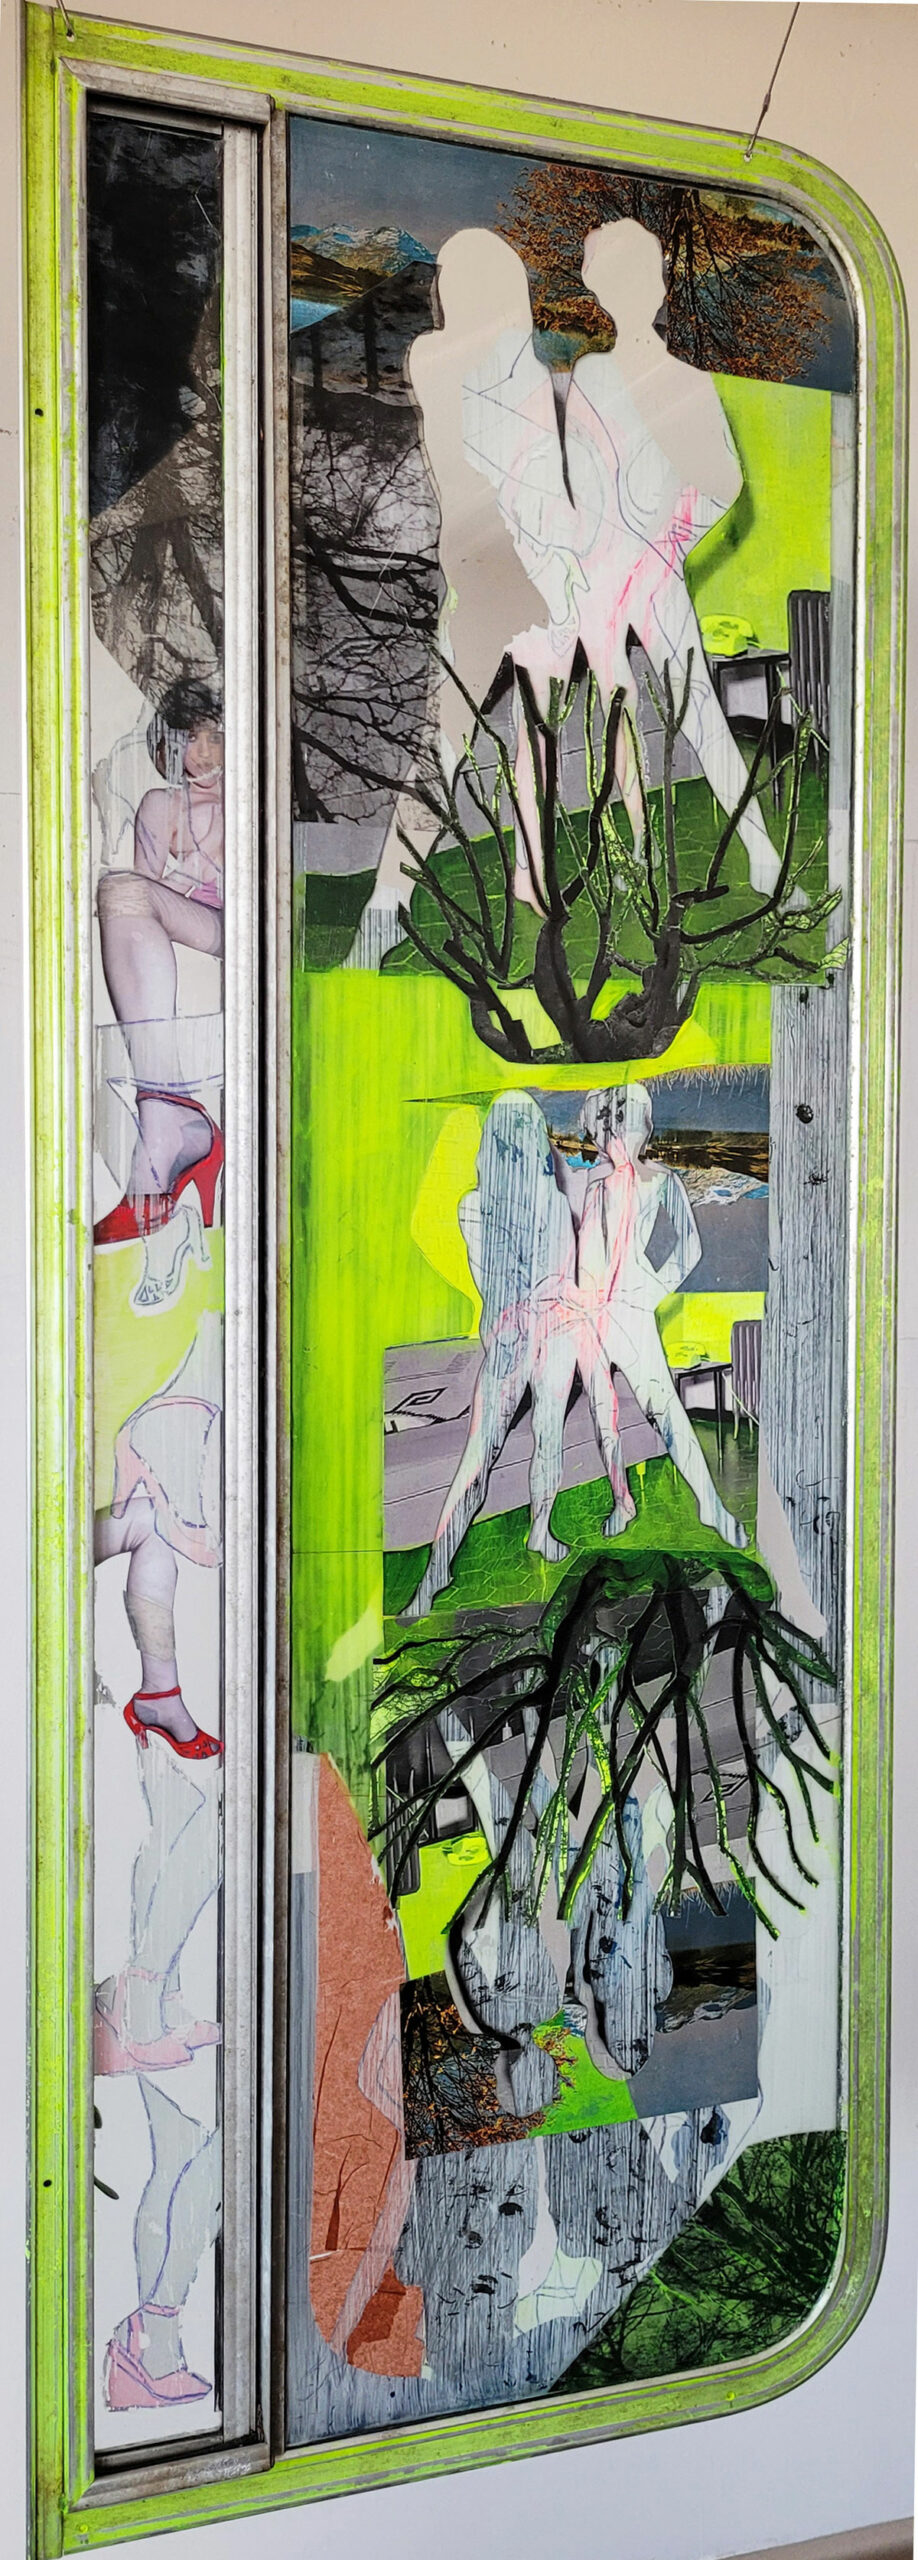 Original art, yellow-green collage on hanging glass window